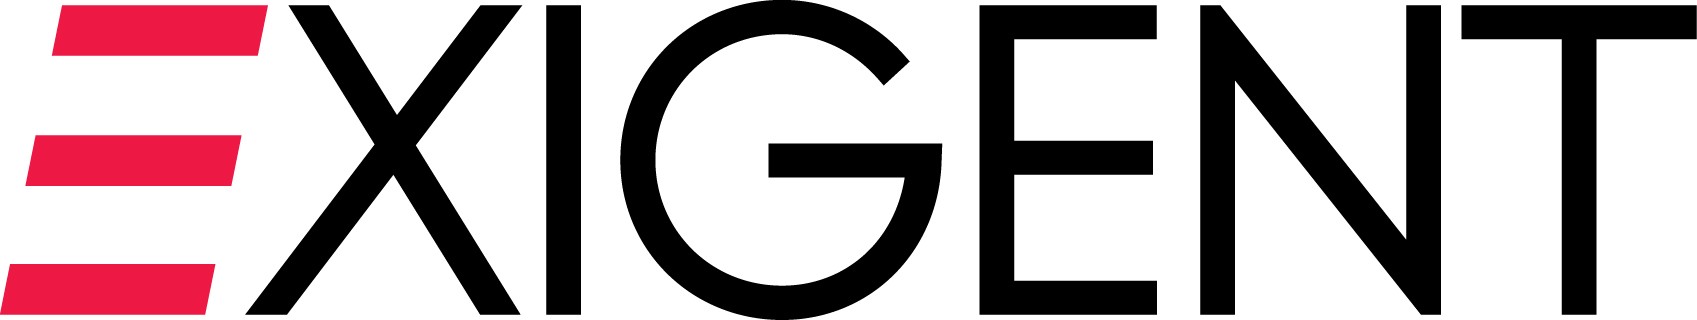 Exigent_logo_RGB